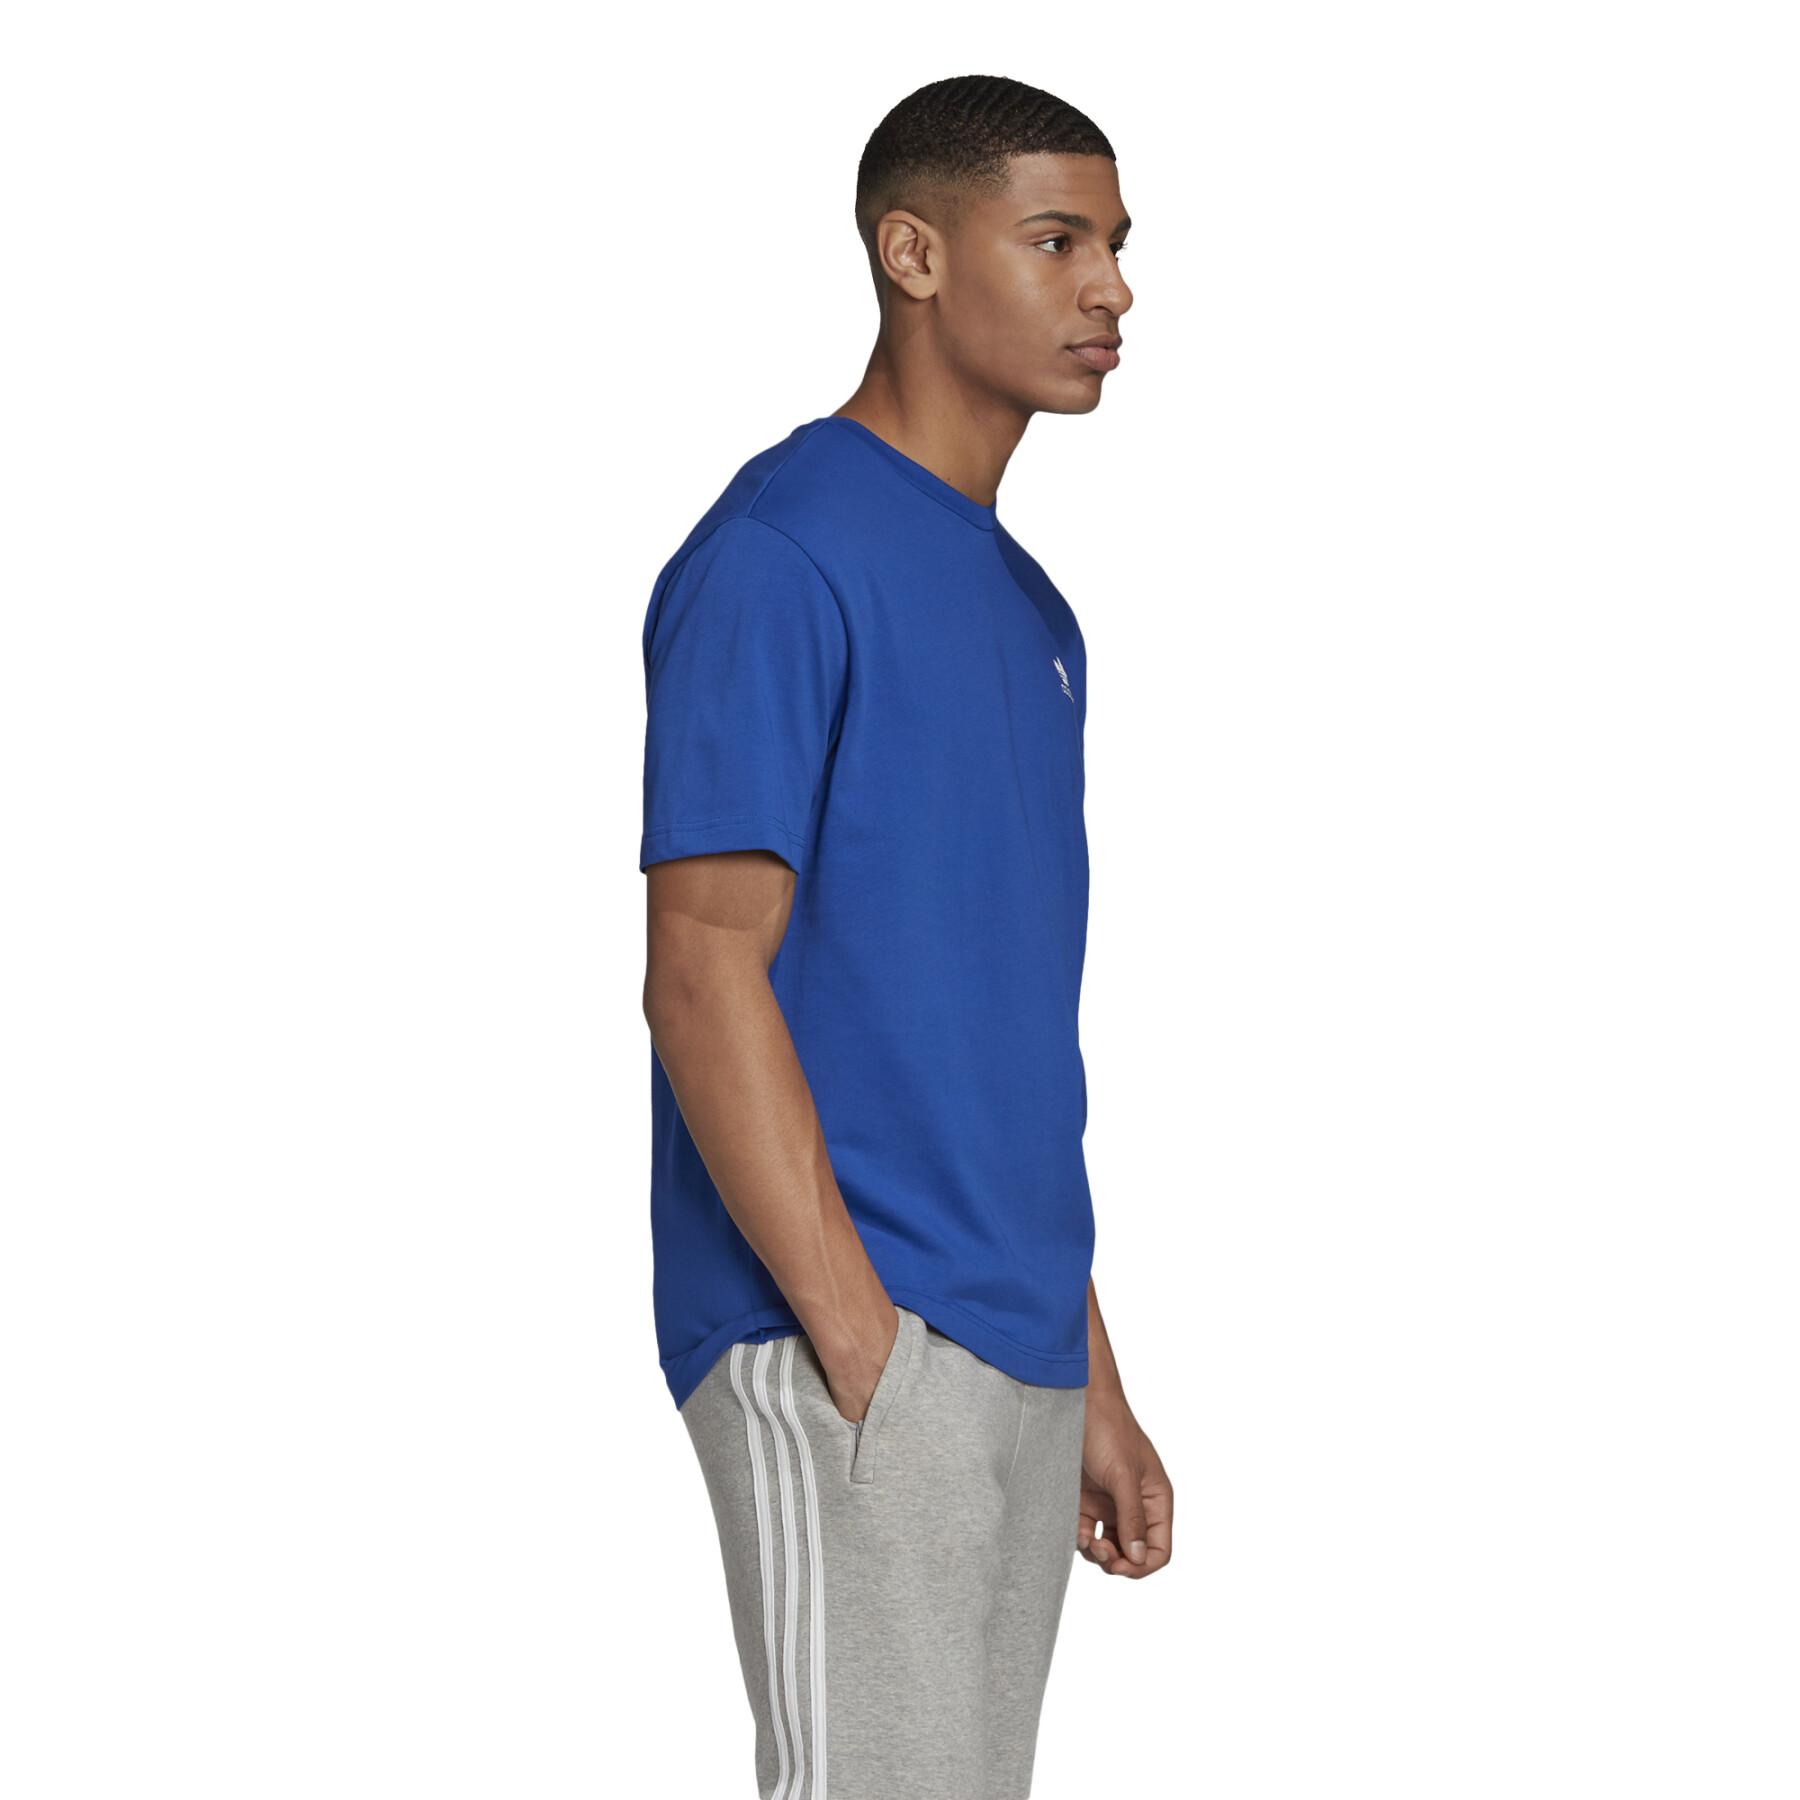 Camiseta adidas Originals Trefoil Boxywith Front and Back Print